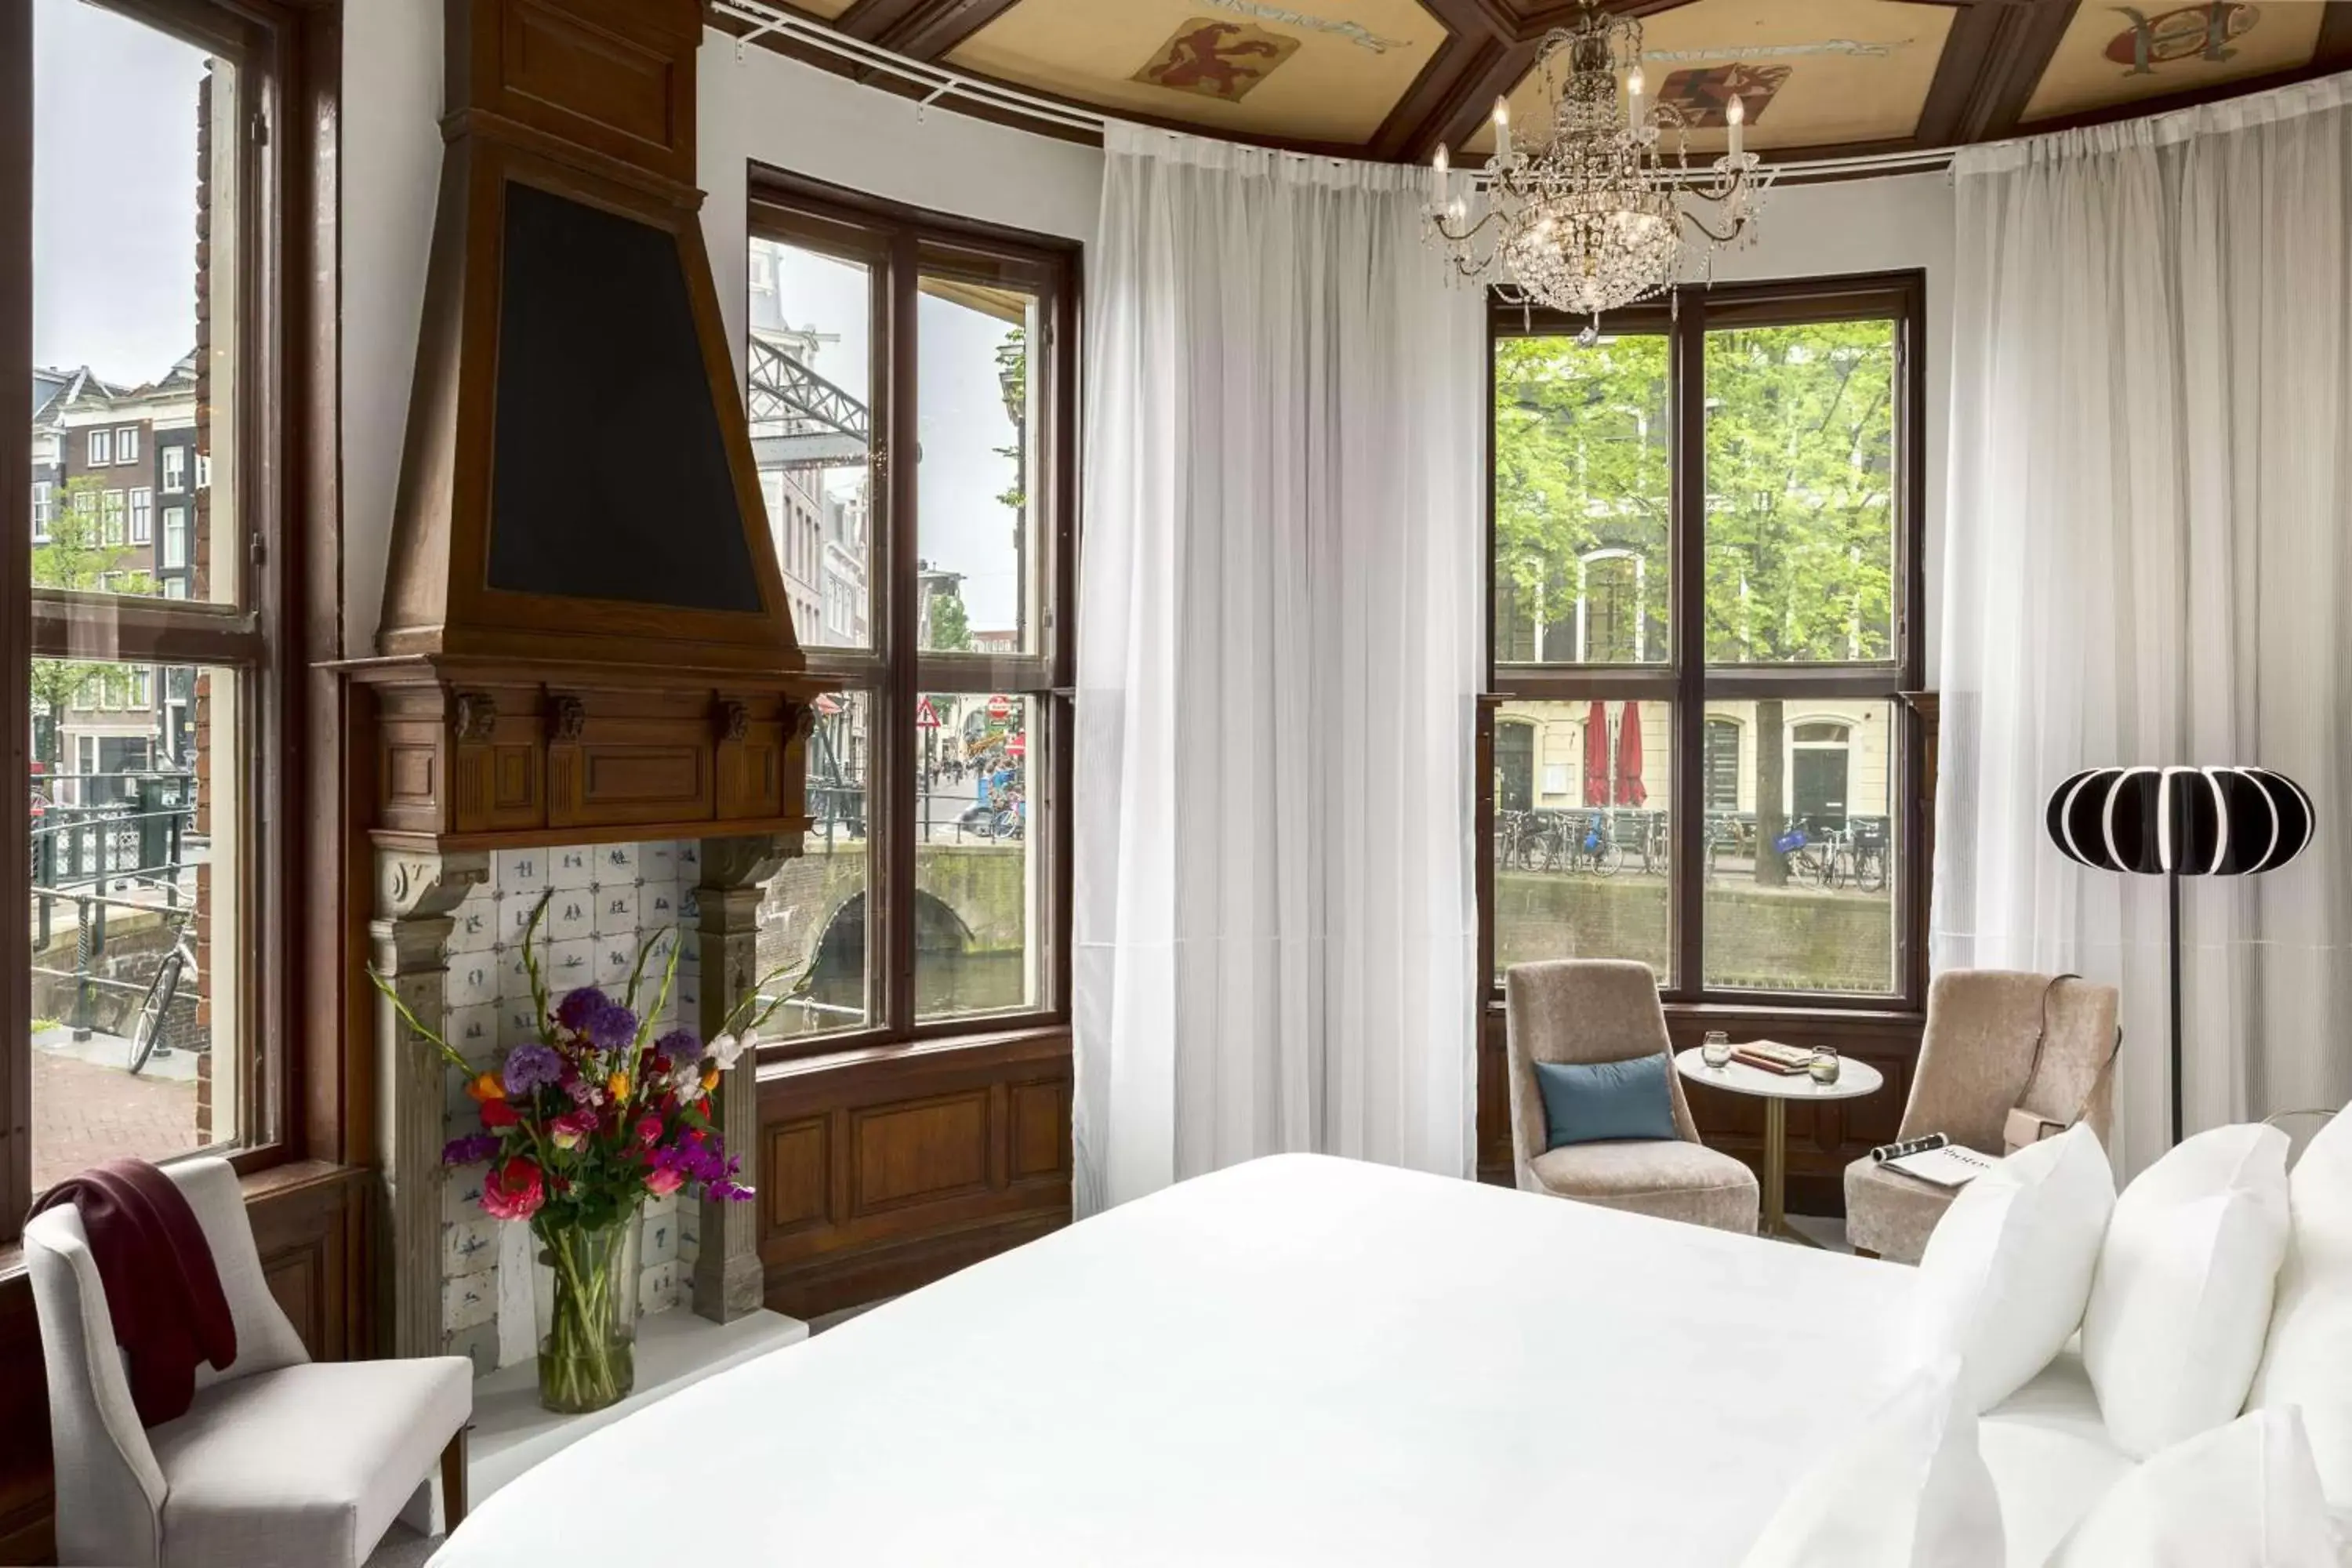 Bedroom in Tivoli Doelen Amsterdam Hotel